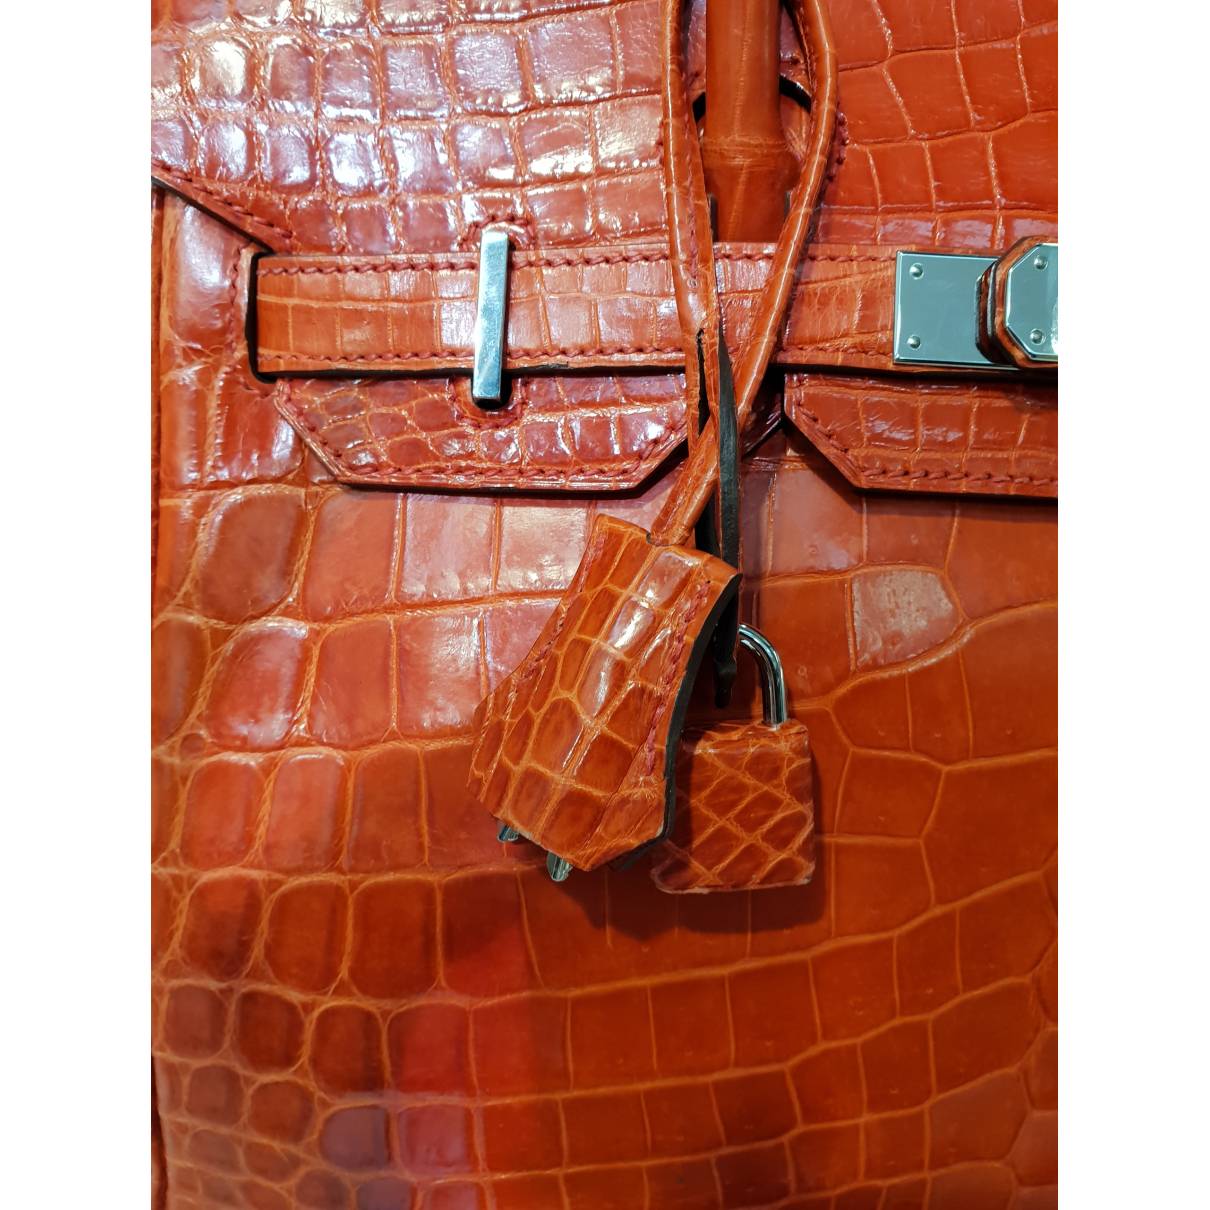 bag-birkin-cm30-crocodile-orange-orange